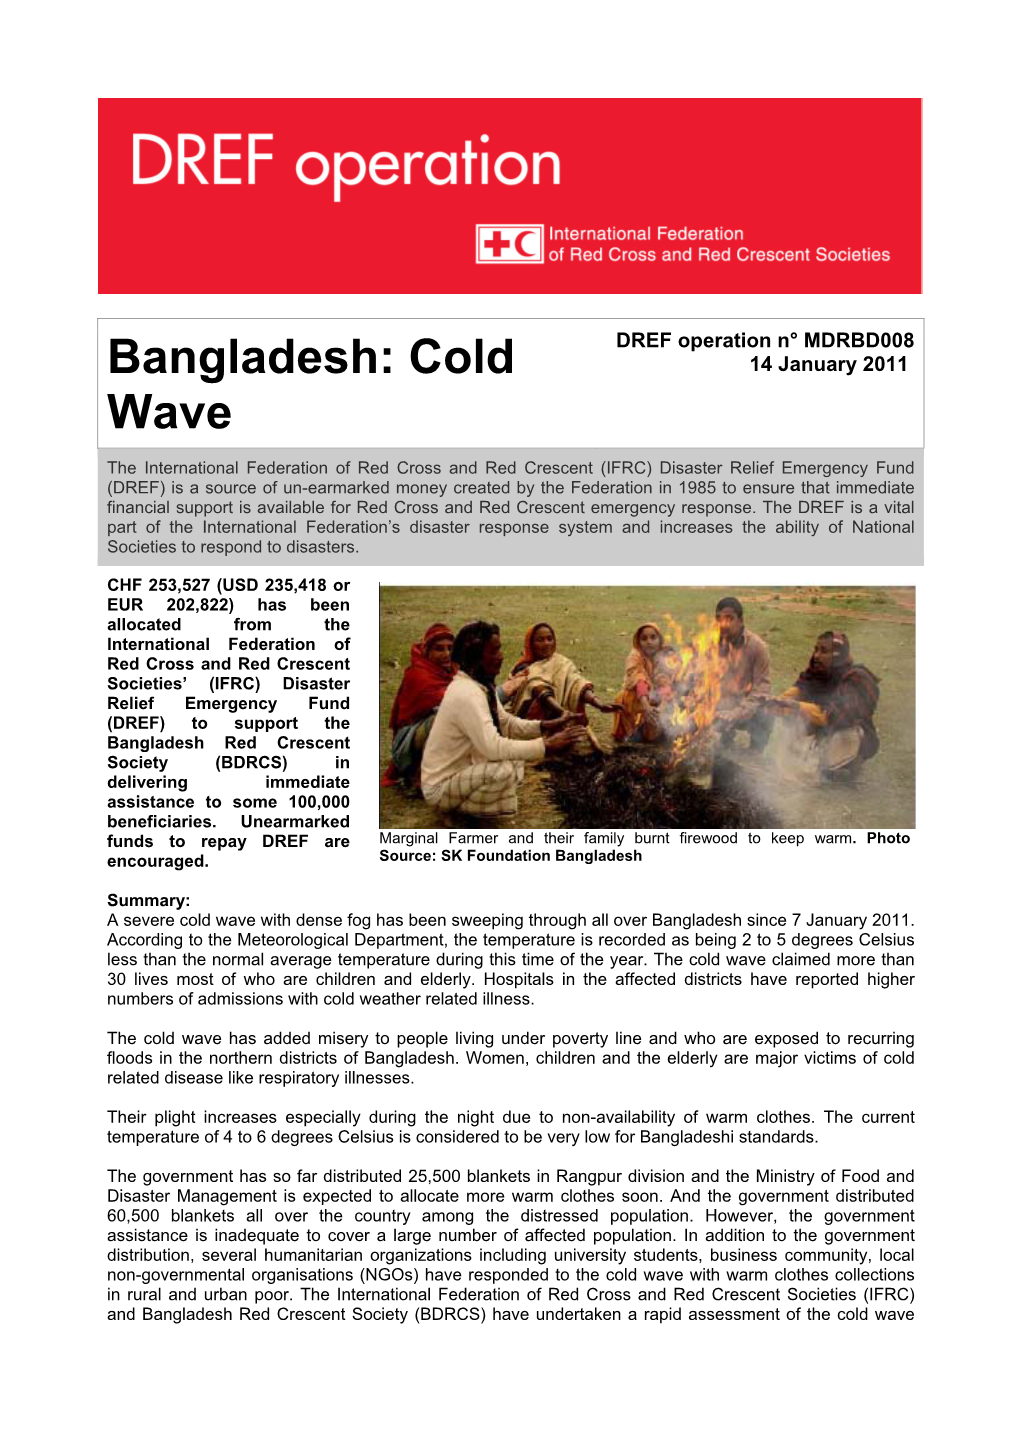 Bangladesh: Cold Wave